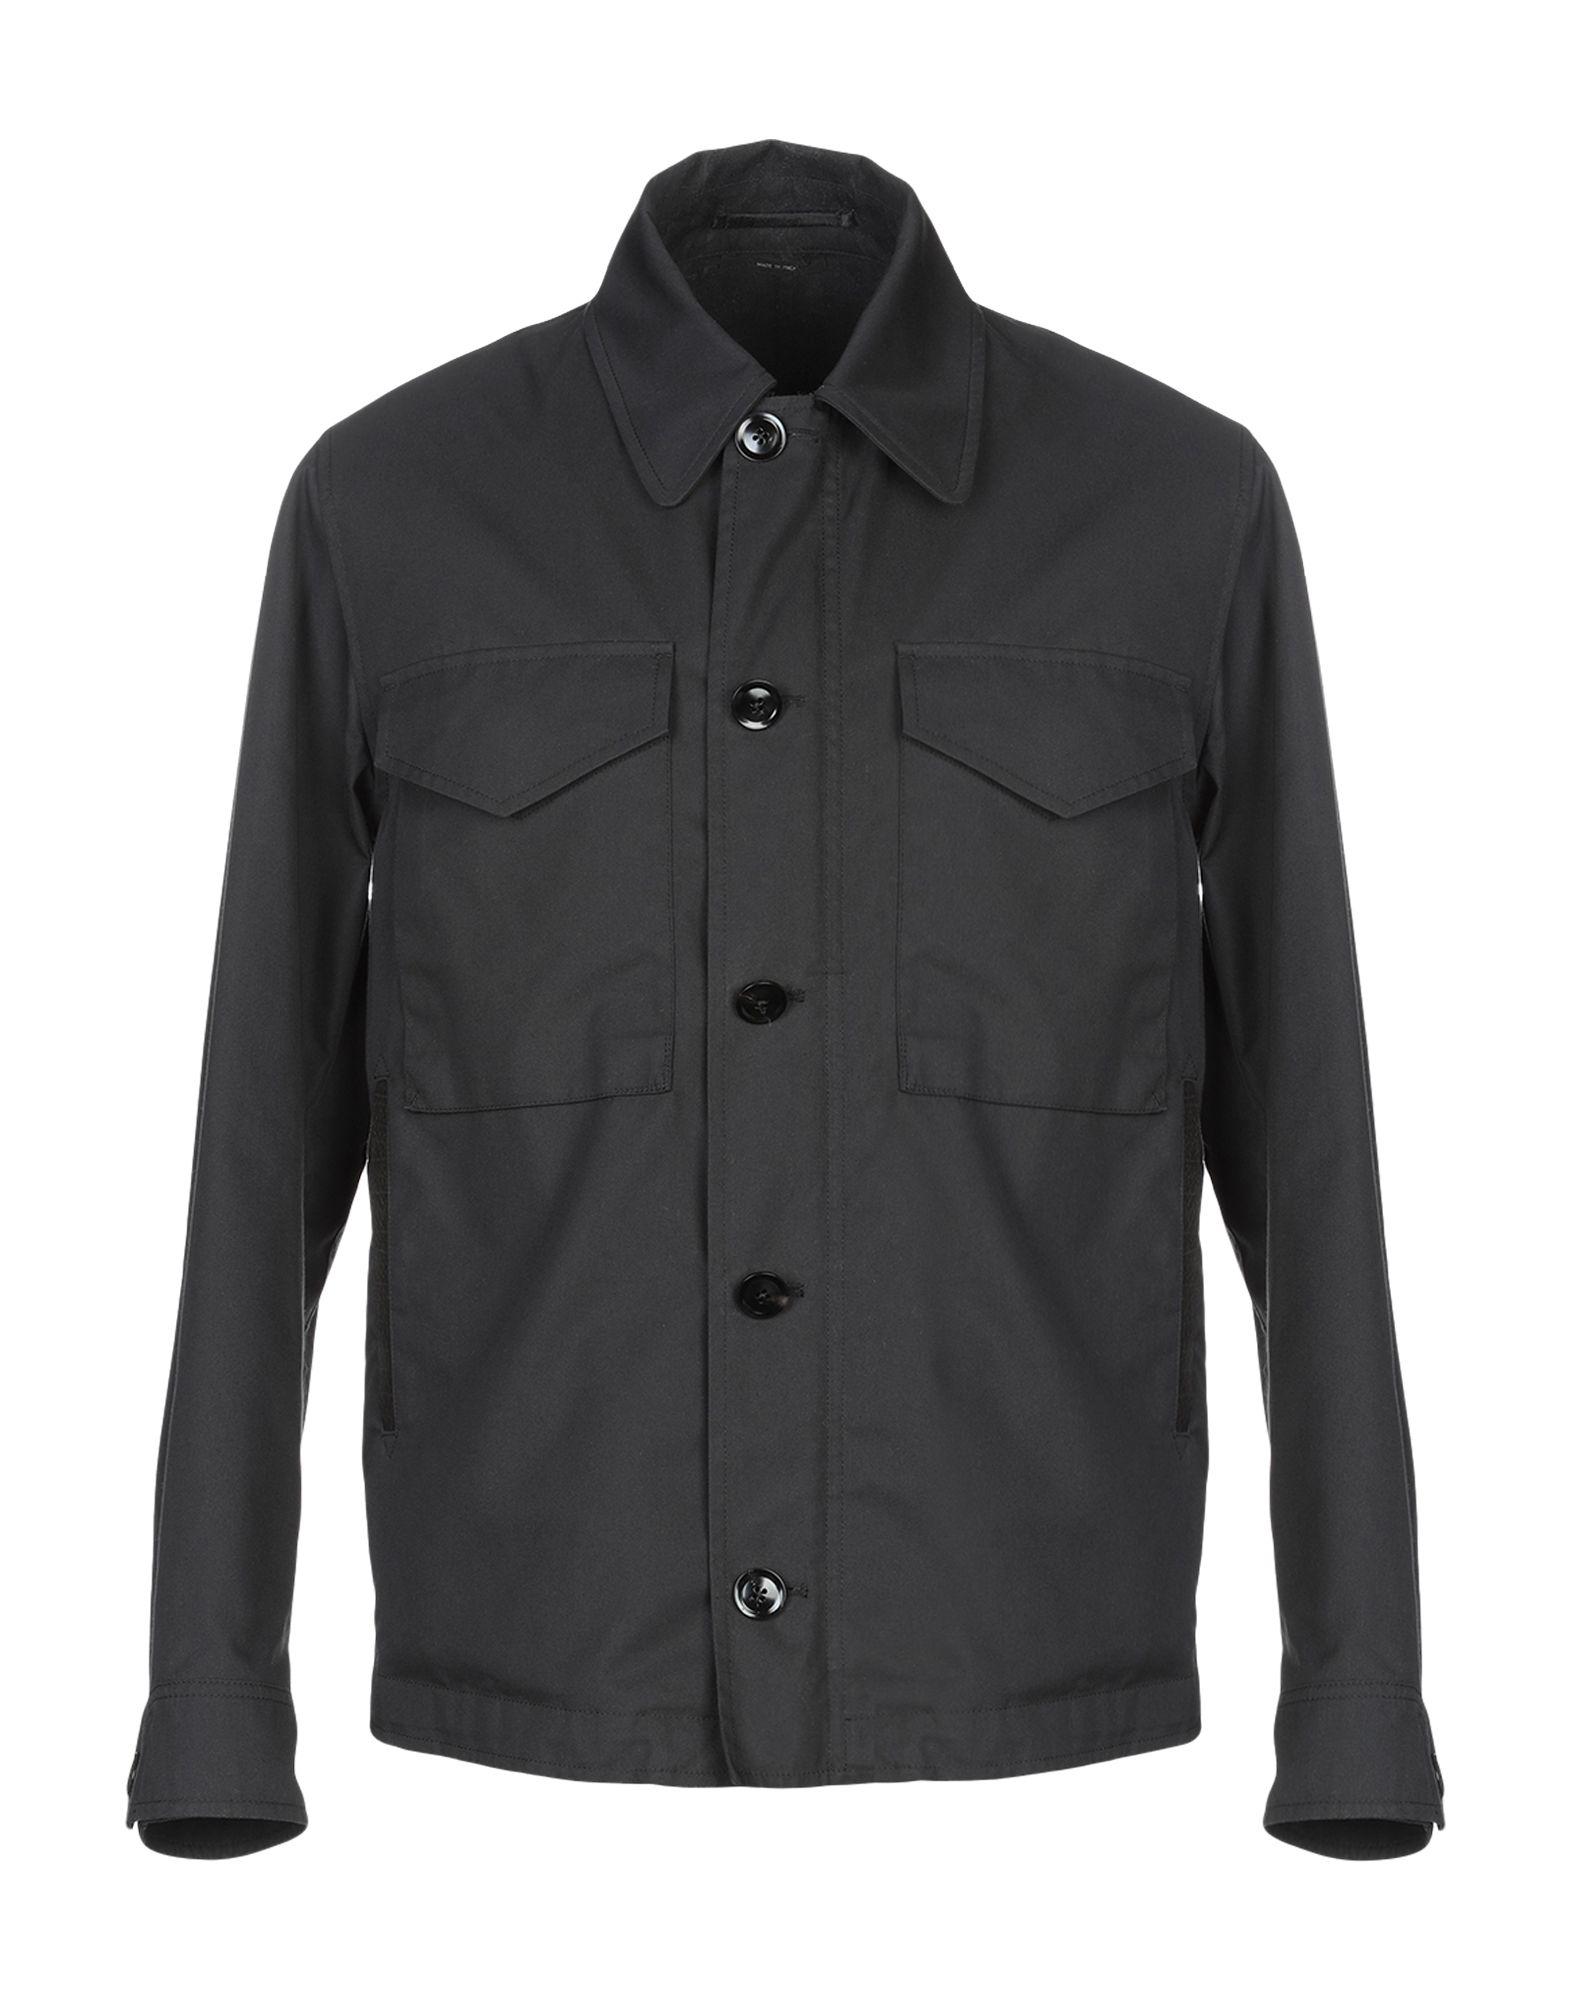 Tom Ford Synthetic Overcoat in Black for Men - Lyst